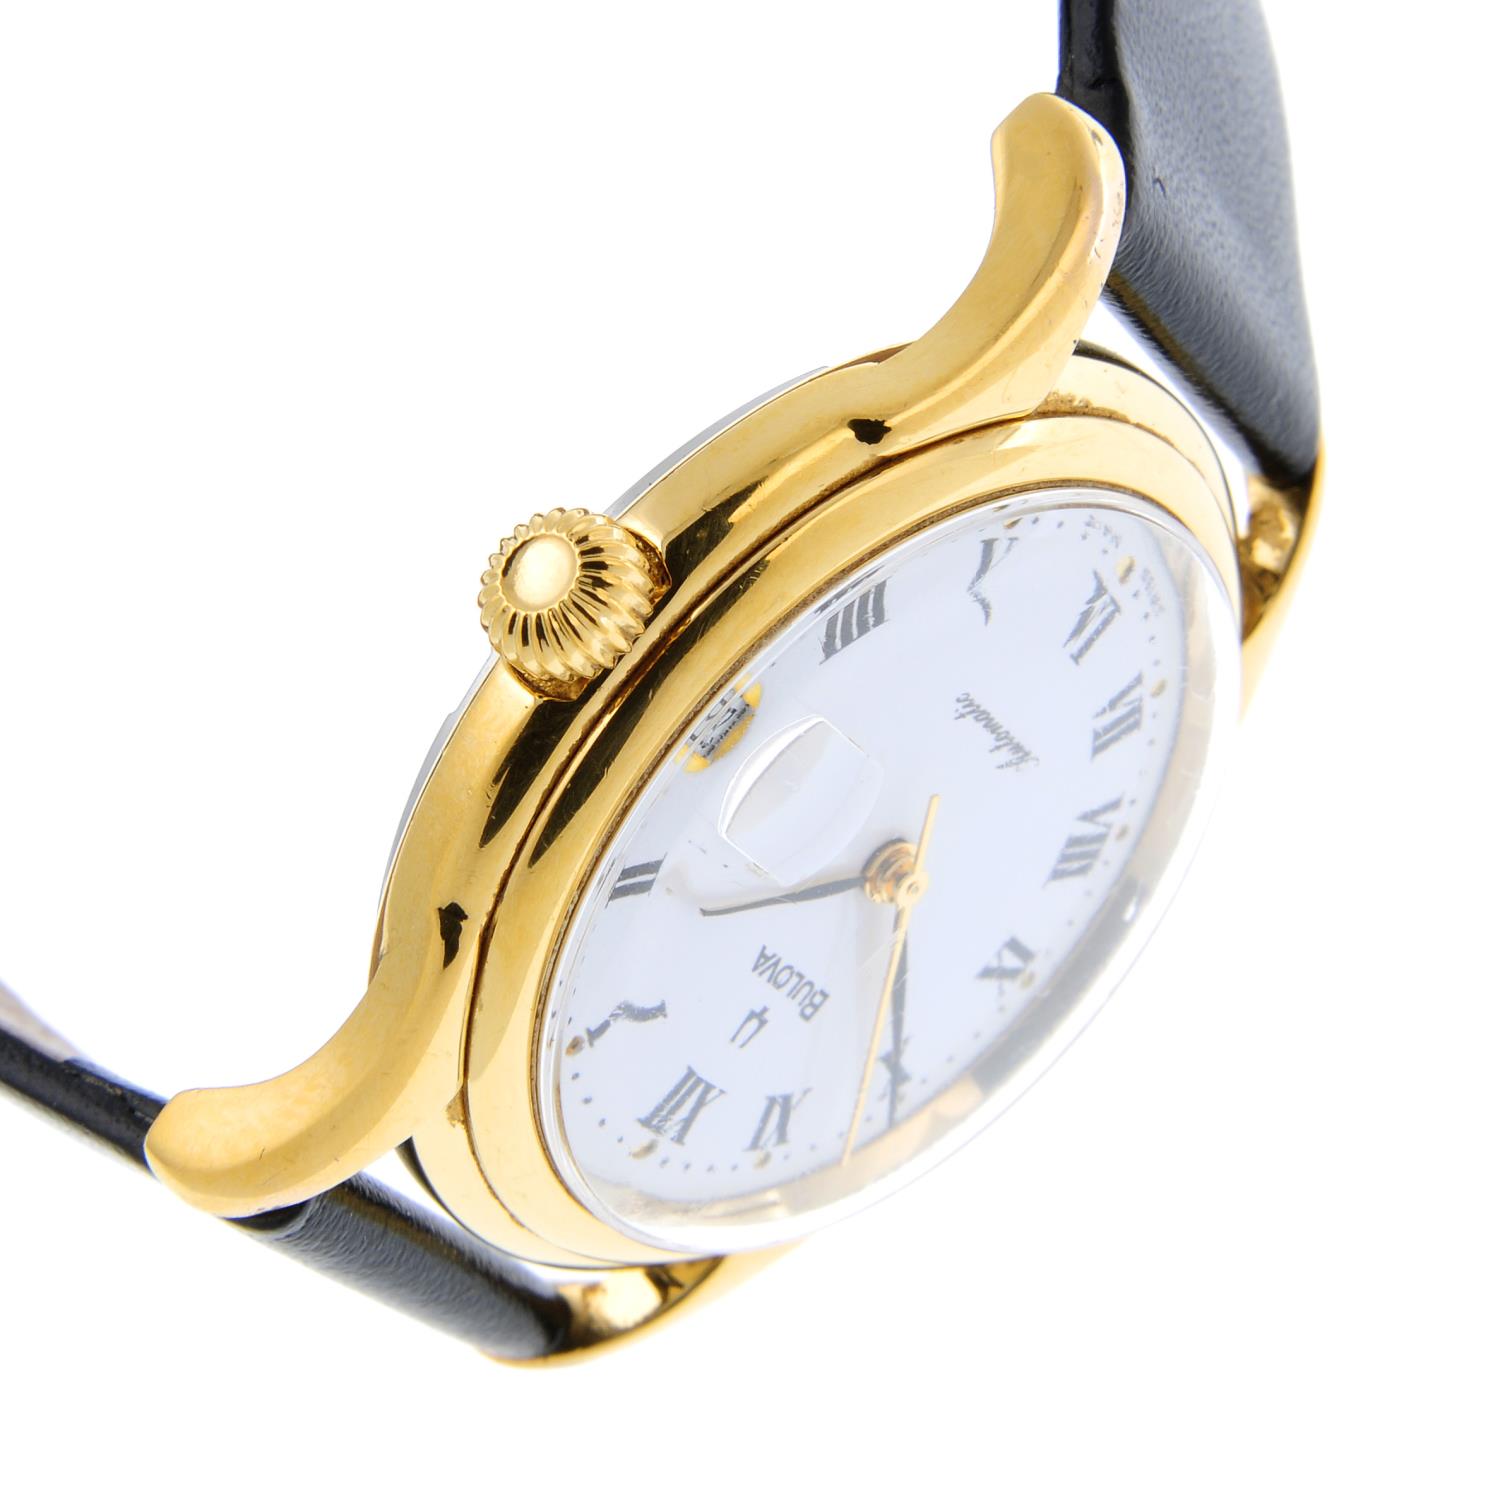 BULOVA - a gentleman's wrist watch. - Image 4 of 4